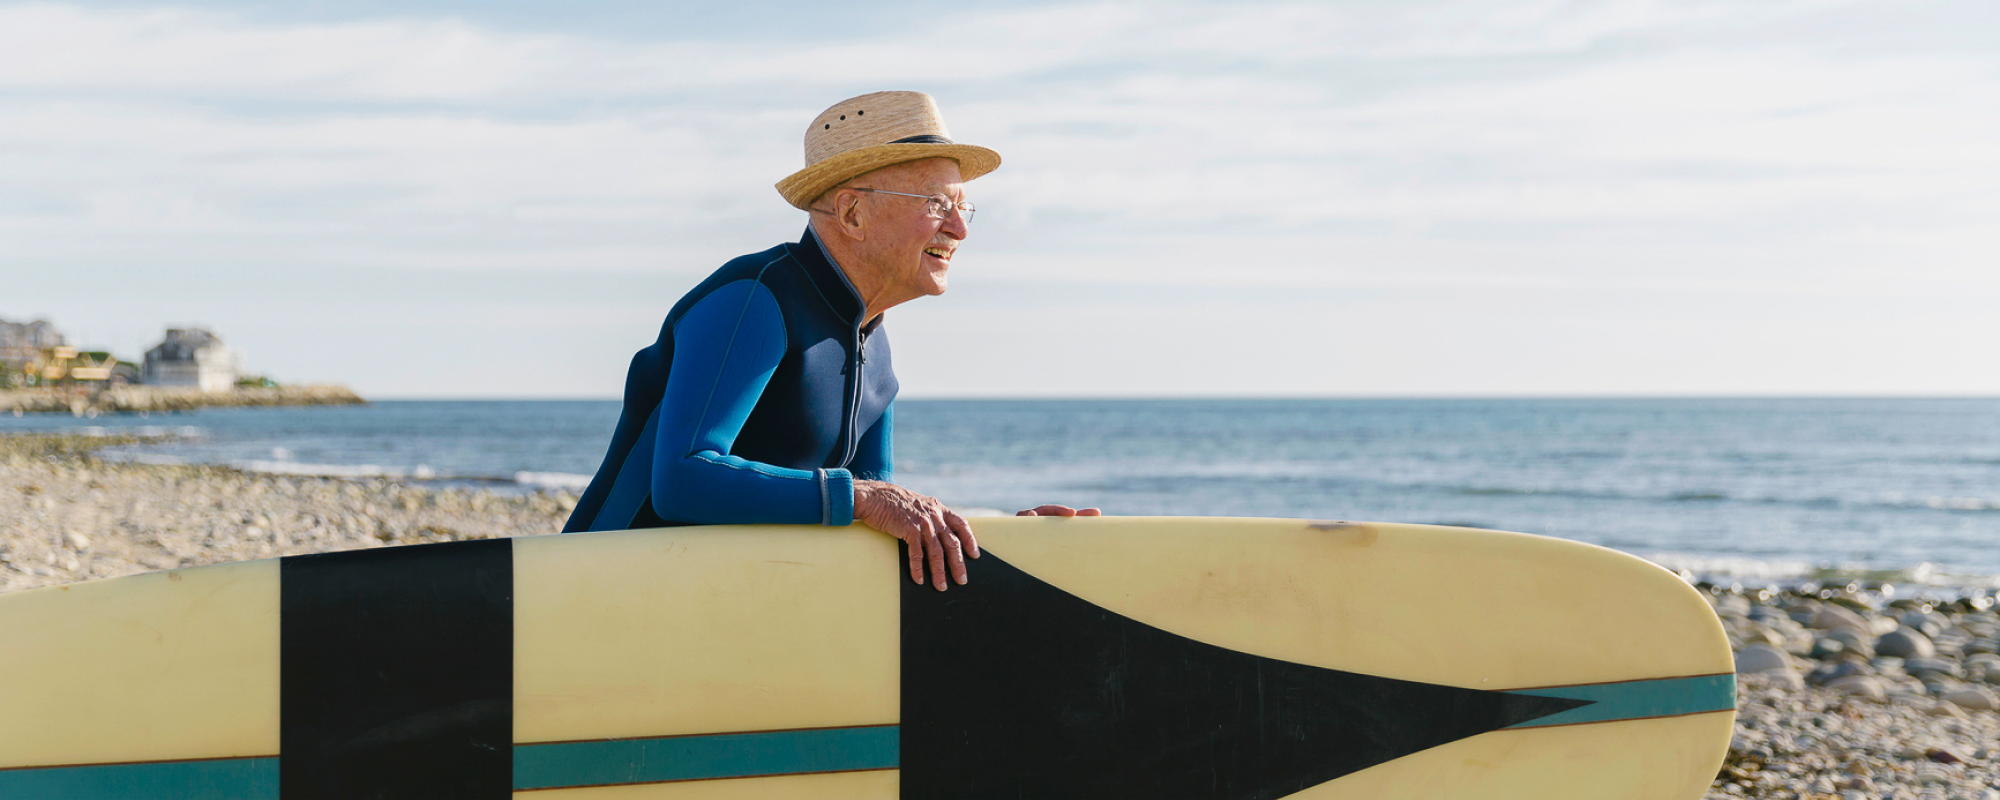 An elderly man walks to the beach with a surfboard.